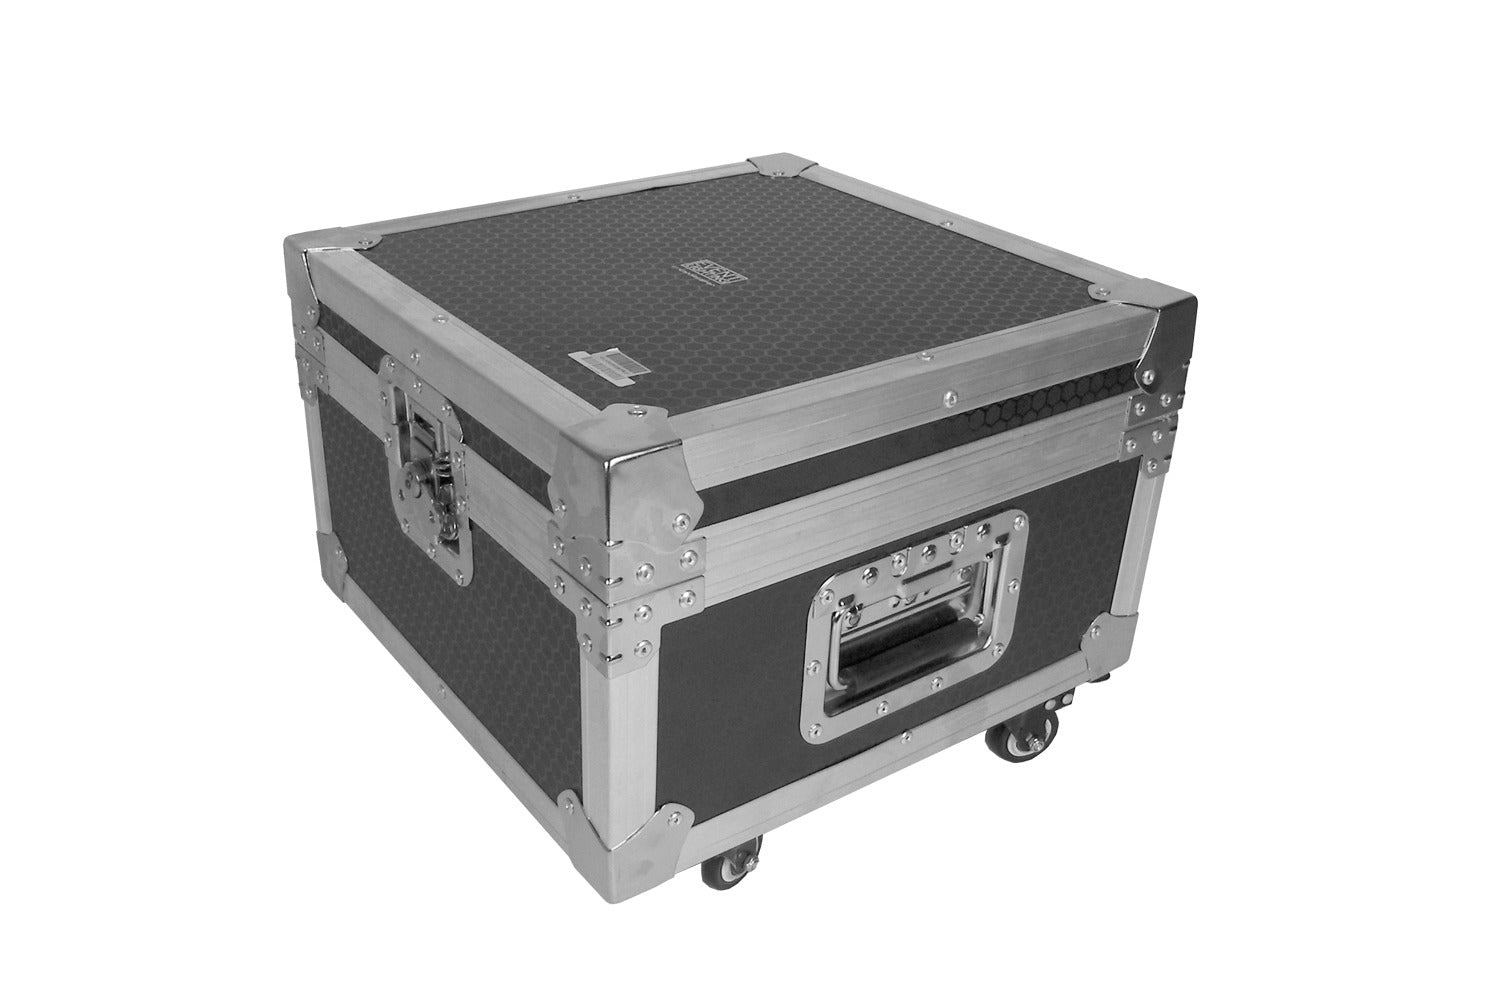 EL5000RGBPRO - 5W RGB Animation Laser. ILDA, RJ45, 30K Scanner - Road case included